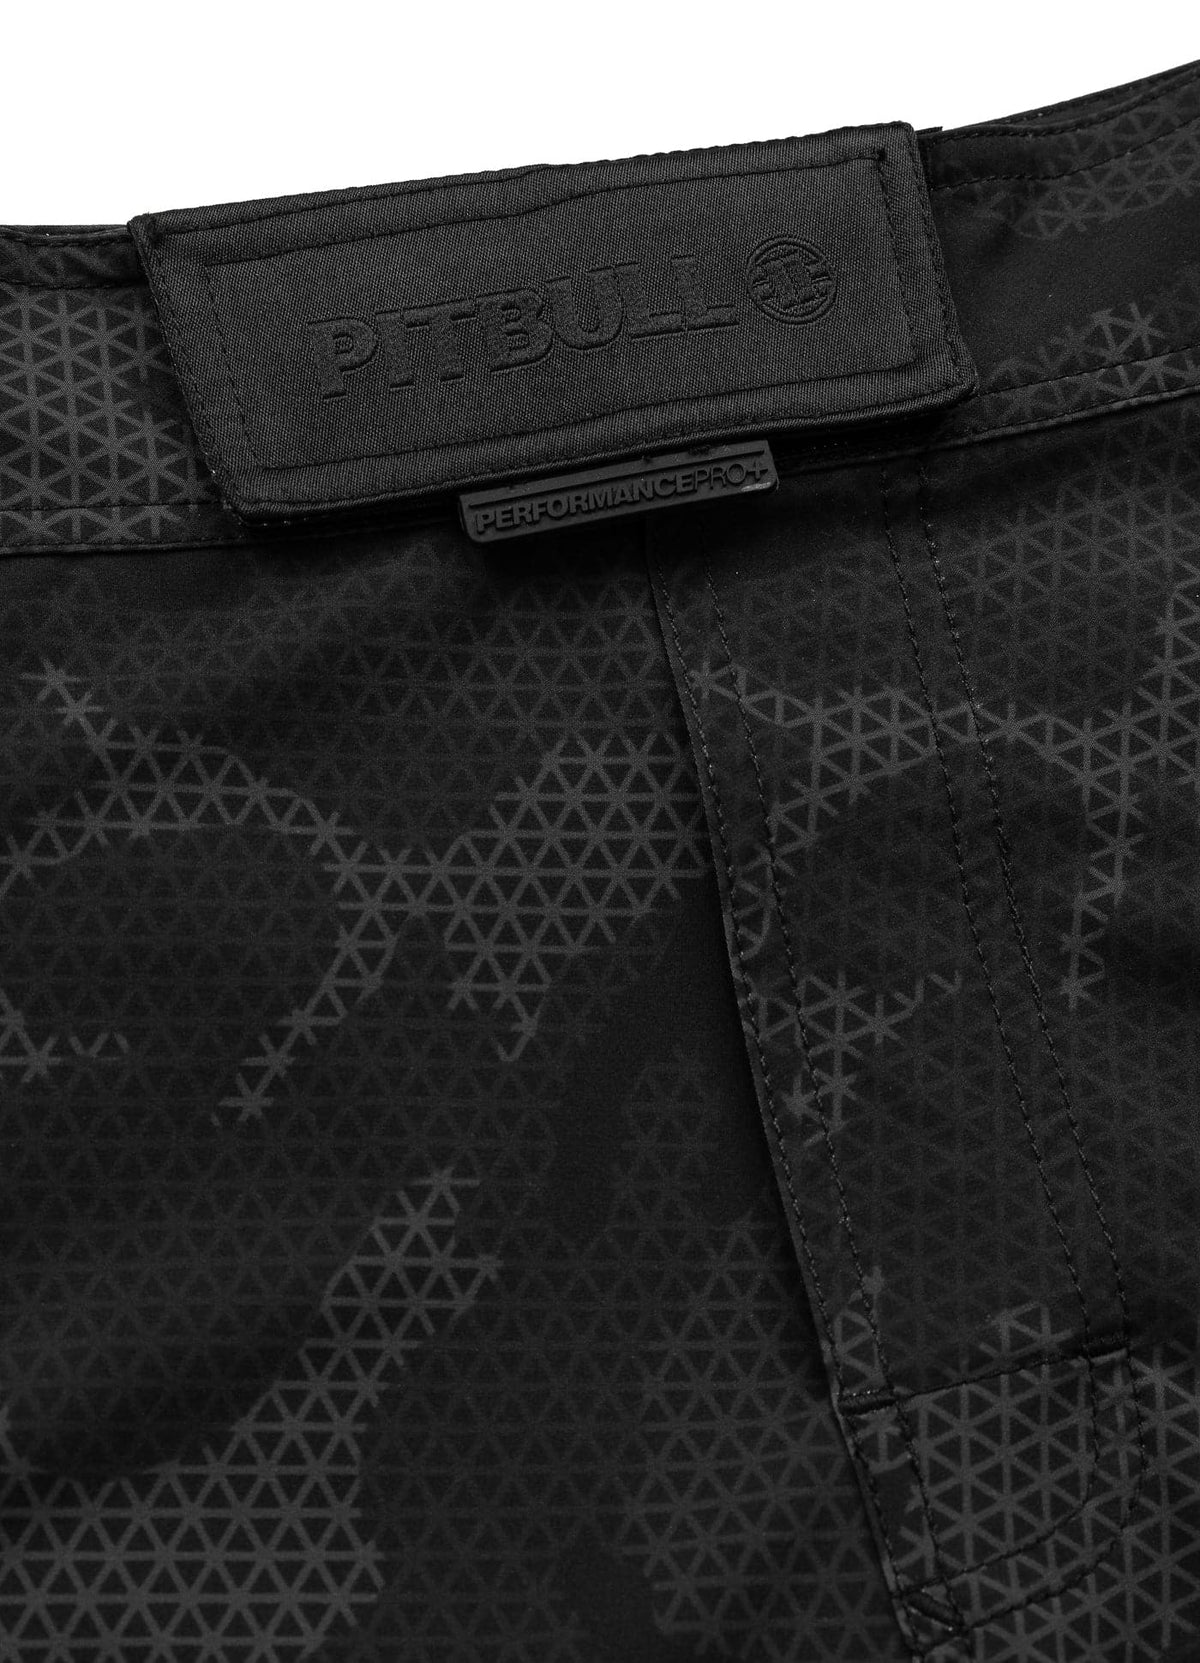 NET CAMO HILLTOP 2 Black Grappling Shorts 3.